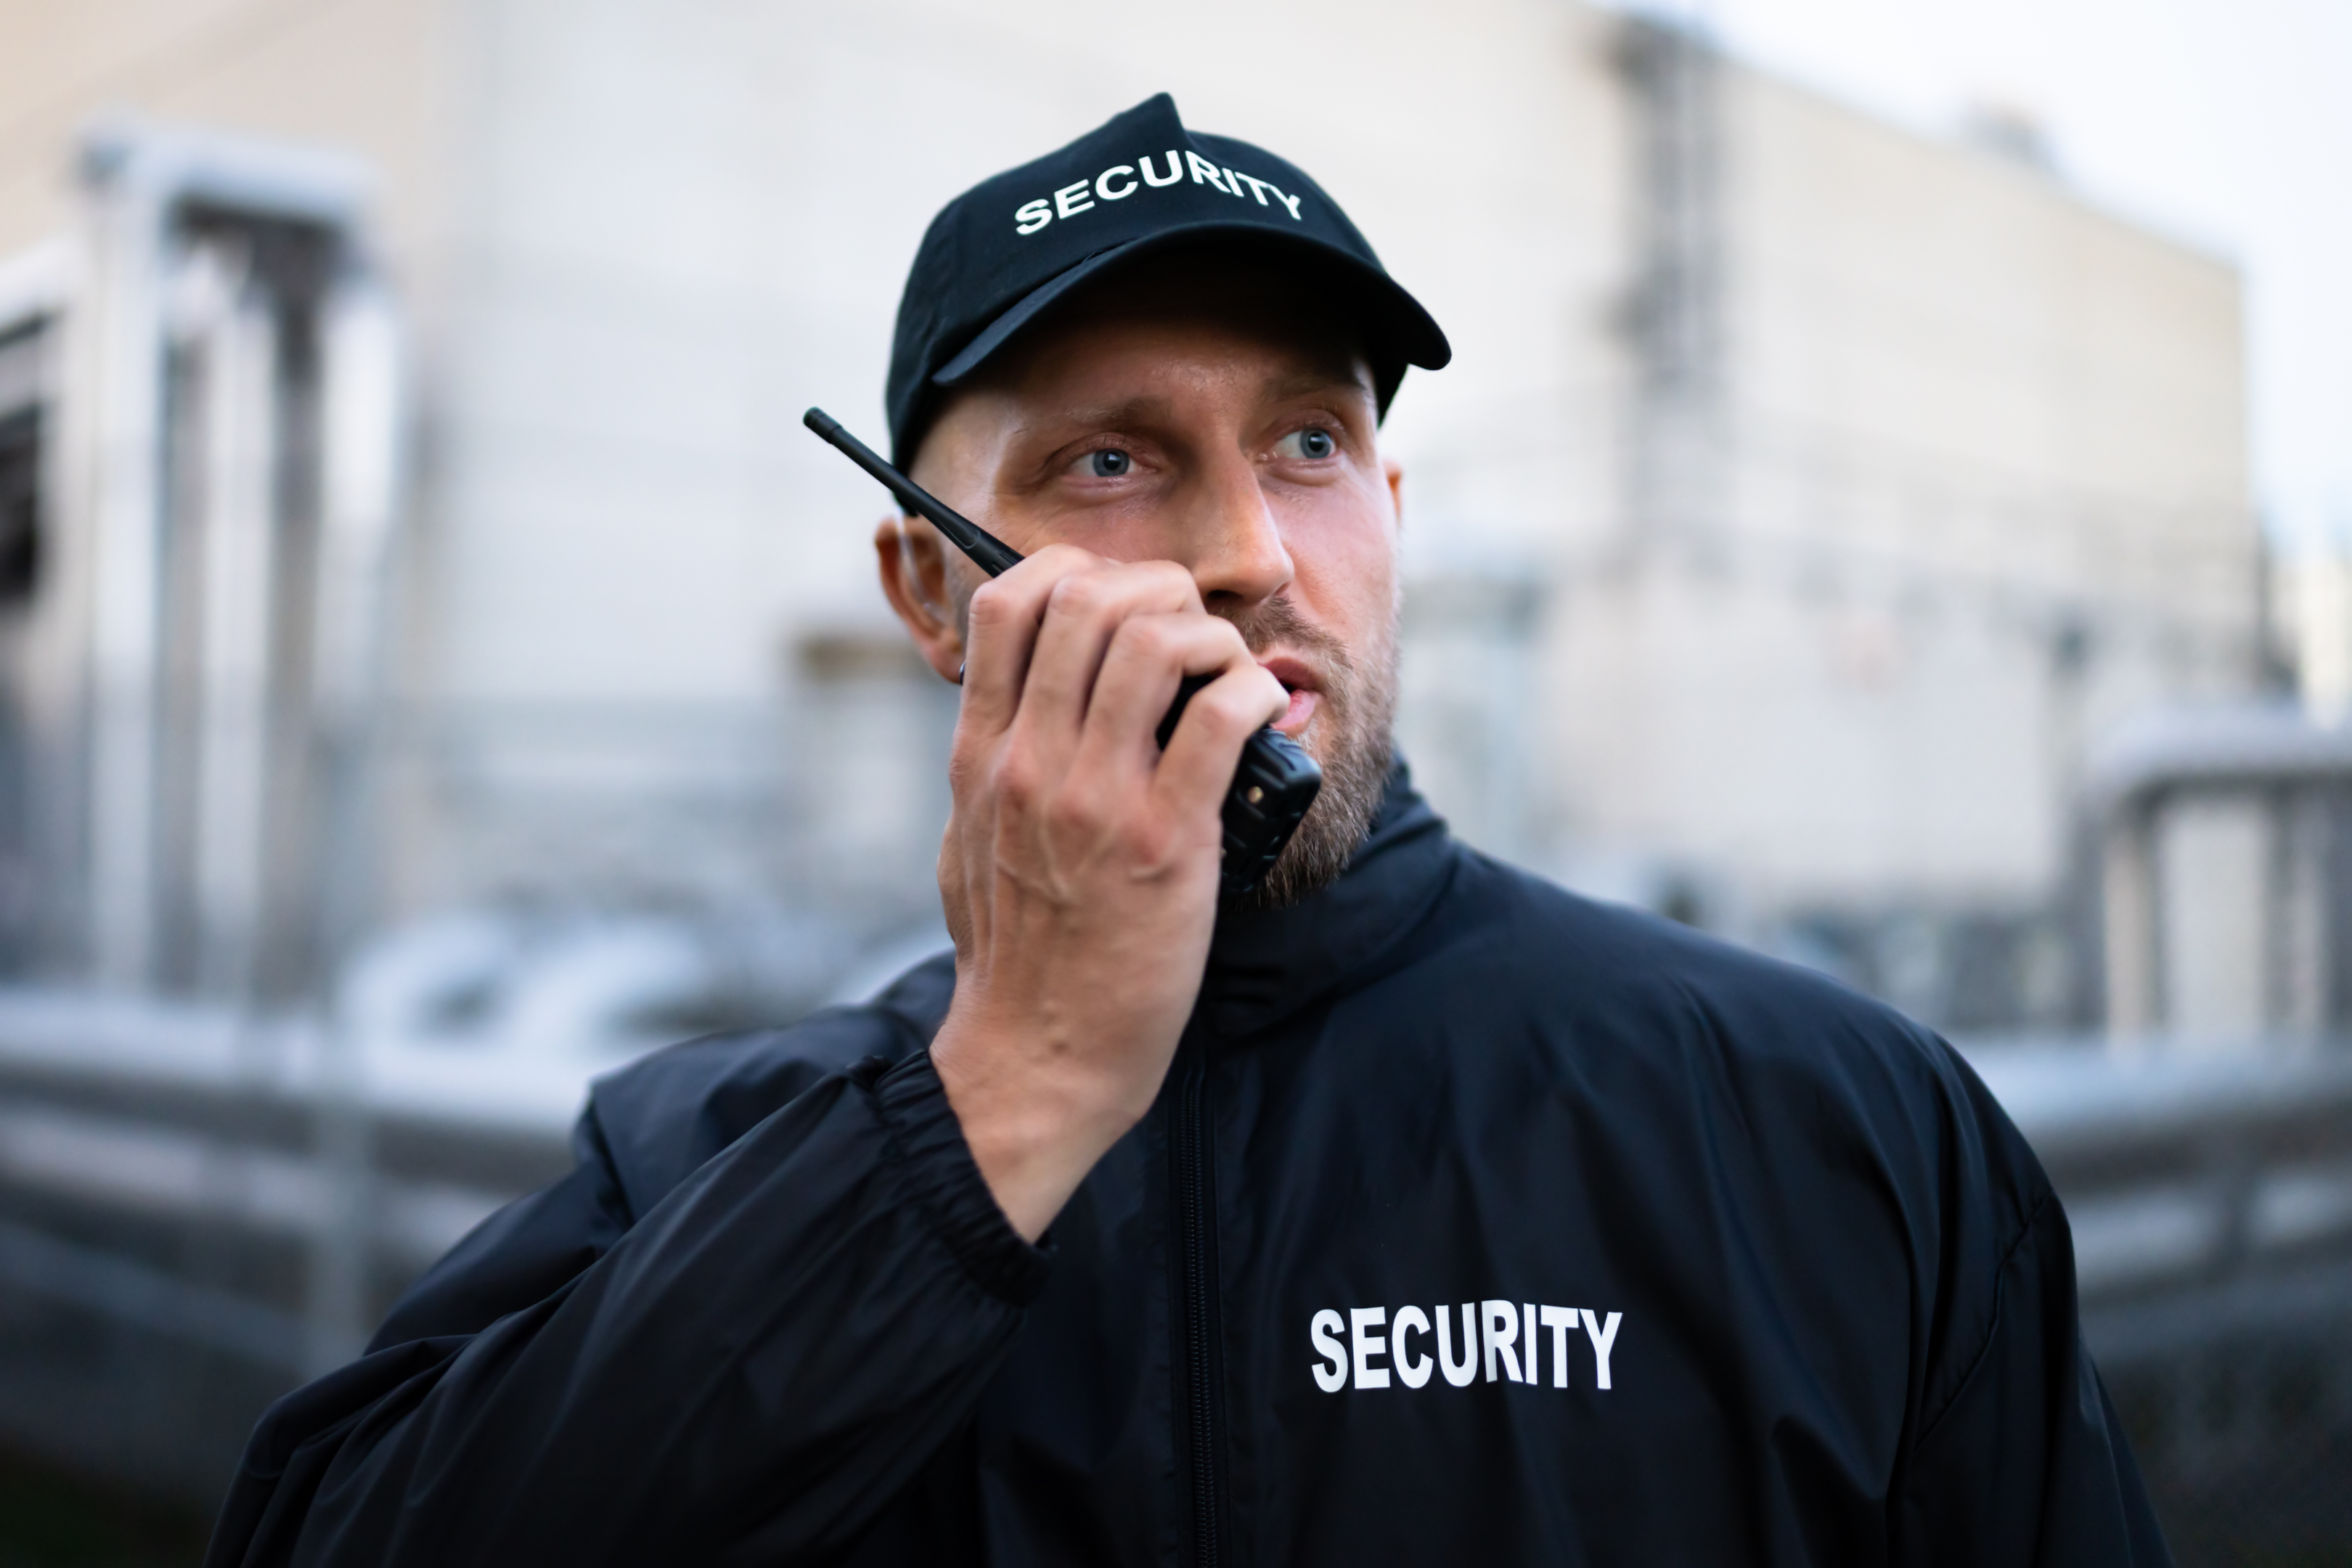 guy wearing security uniform - security wear information